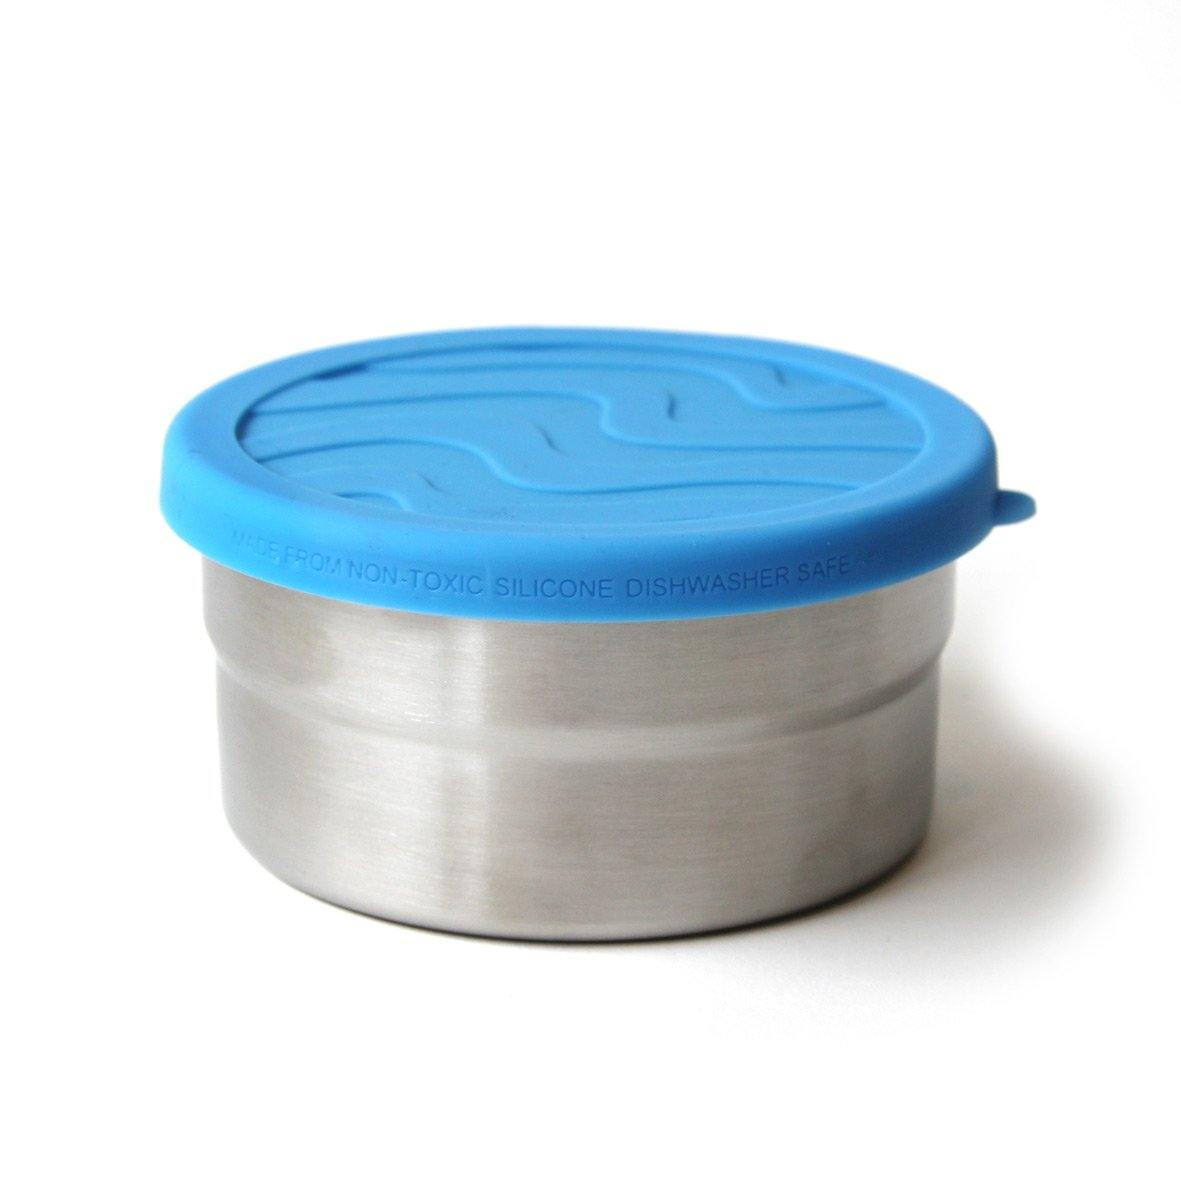 Ecolunchbox Medium Seal Cup Blue Water Bento Medium Food Container